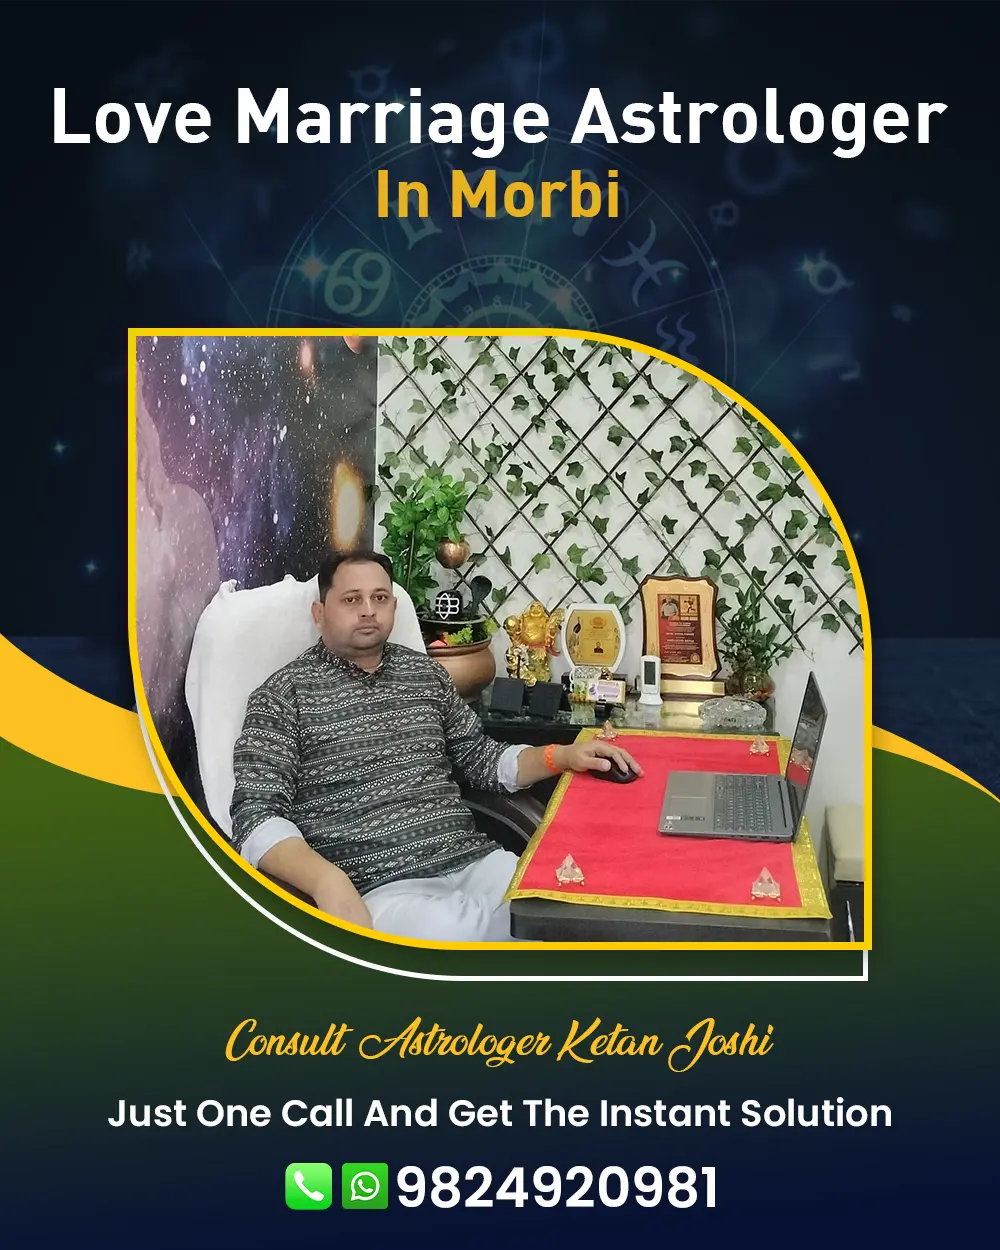 Love Marriage Astrologer In Morbi